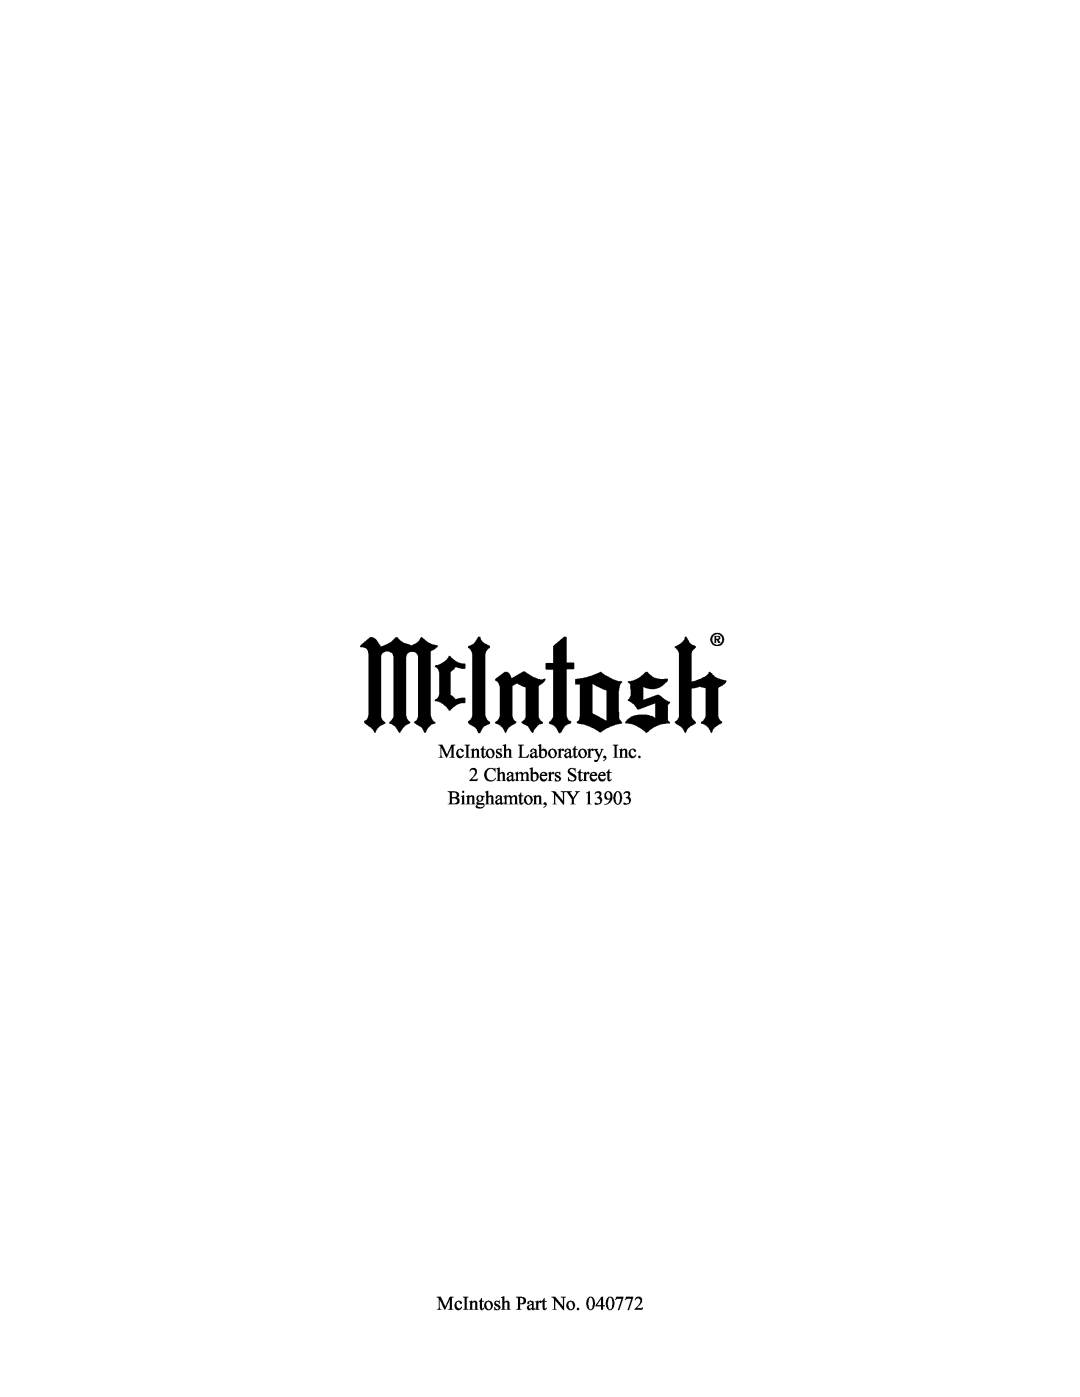 McIntosh MA6900 manual McIntosh Laboratory, Inc 2 Chambers Street, Binghamton, NY, McIntosh Part No 